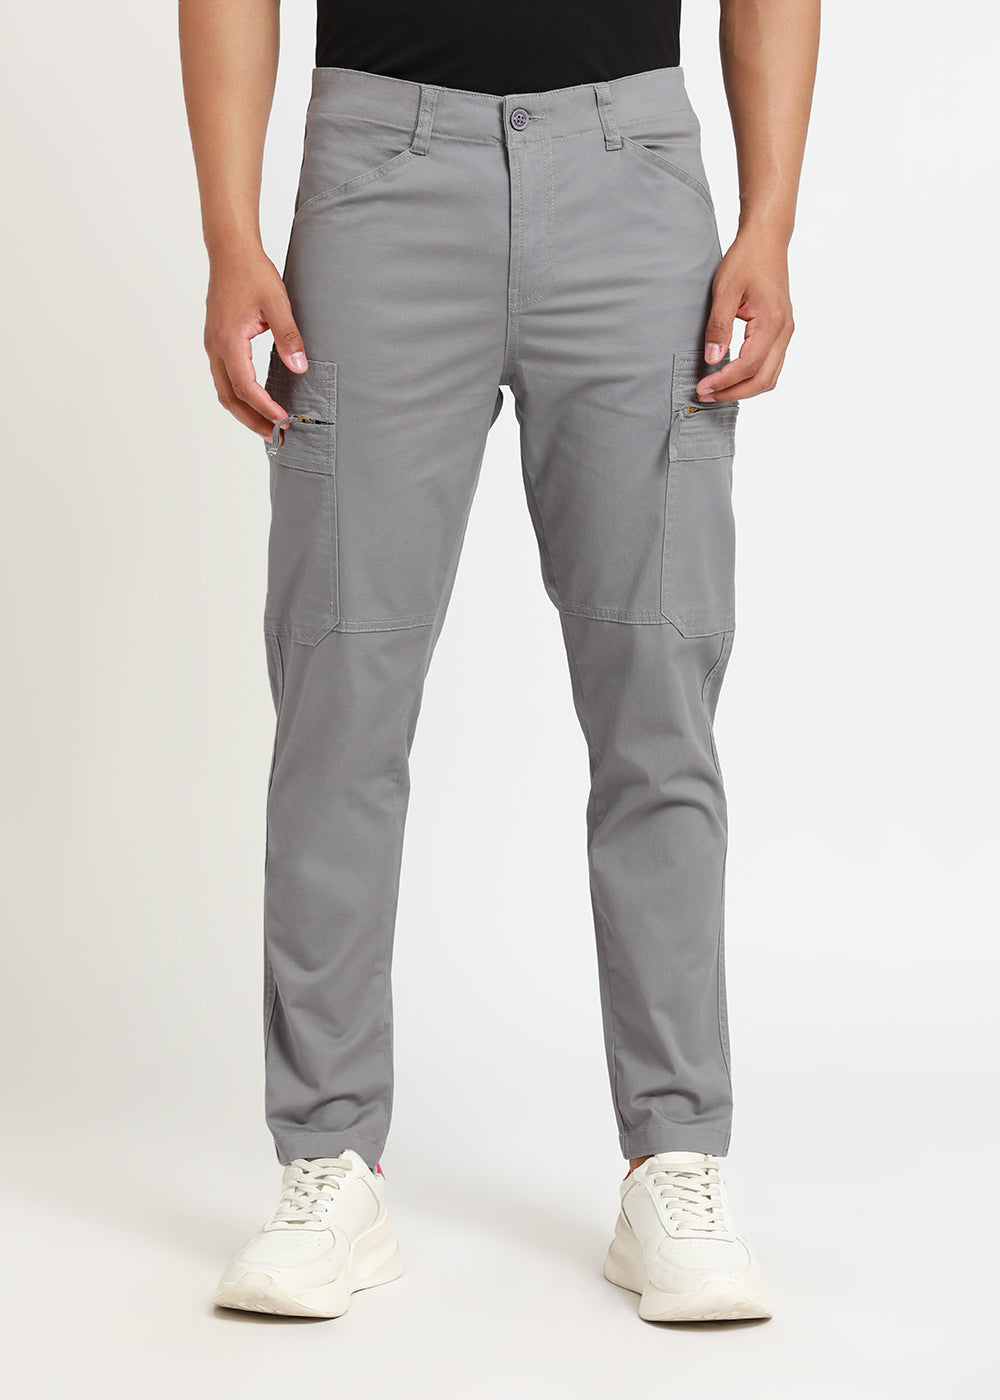 Grizzly Grey Zip Cargo Pants